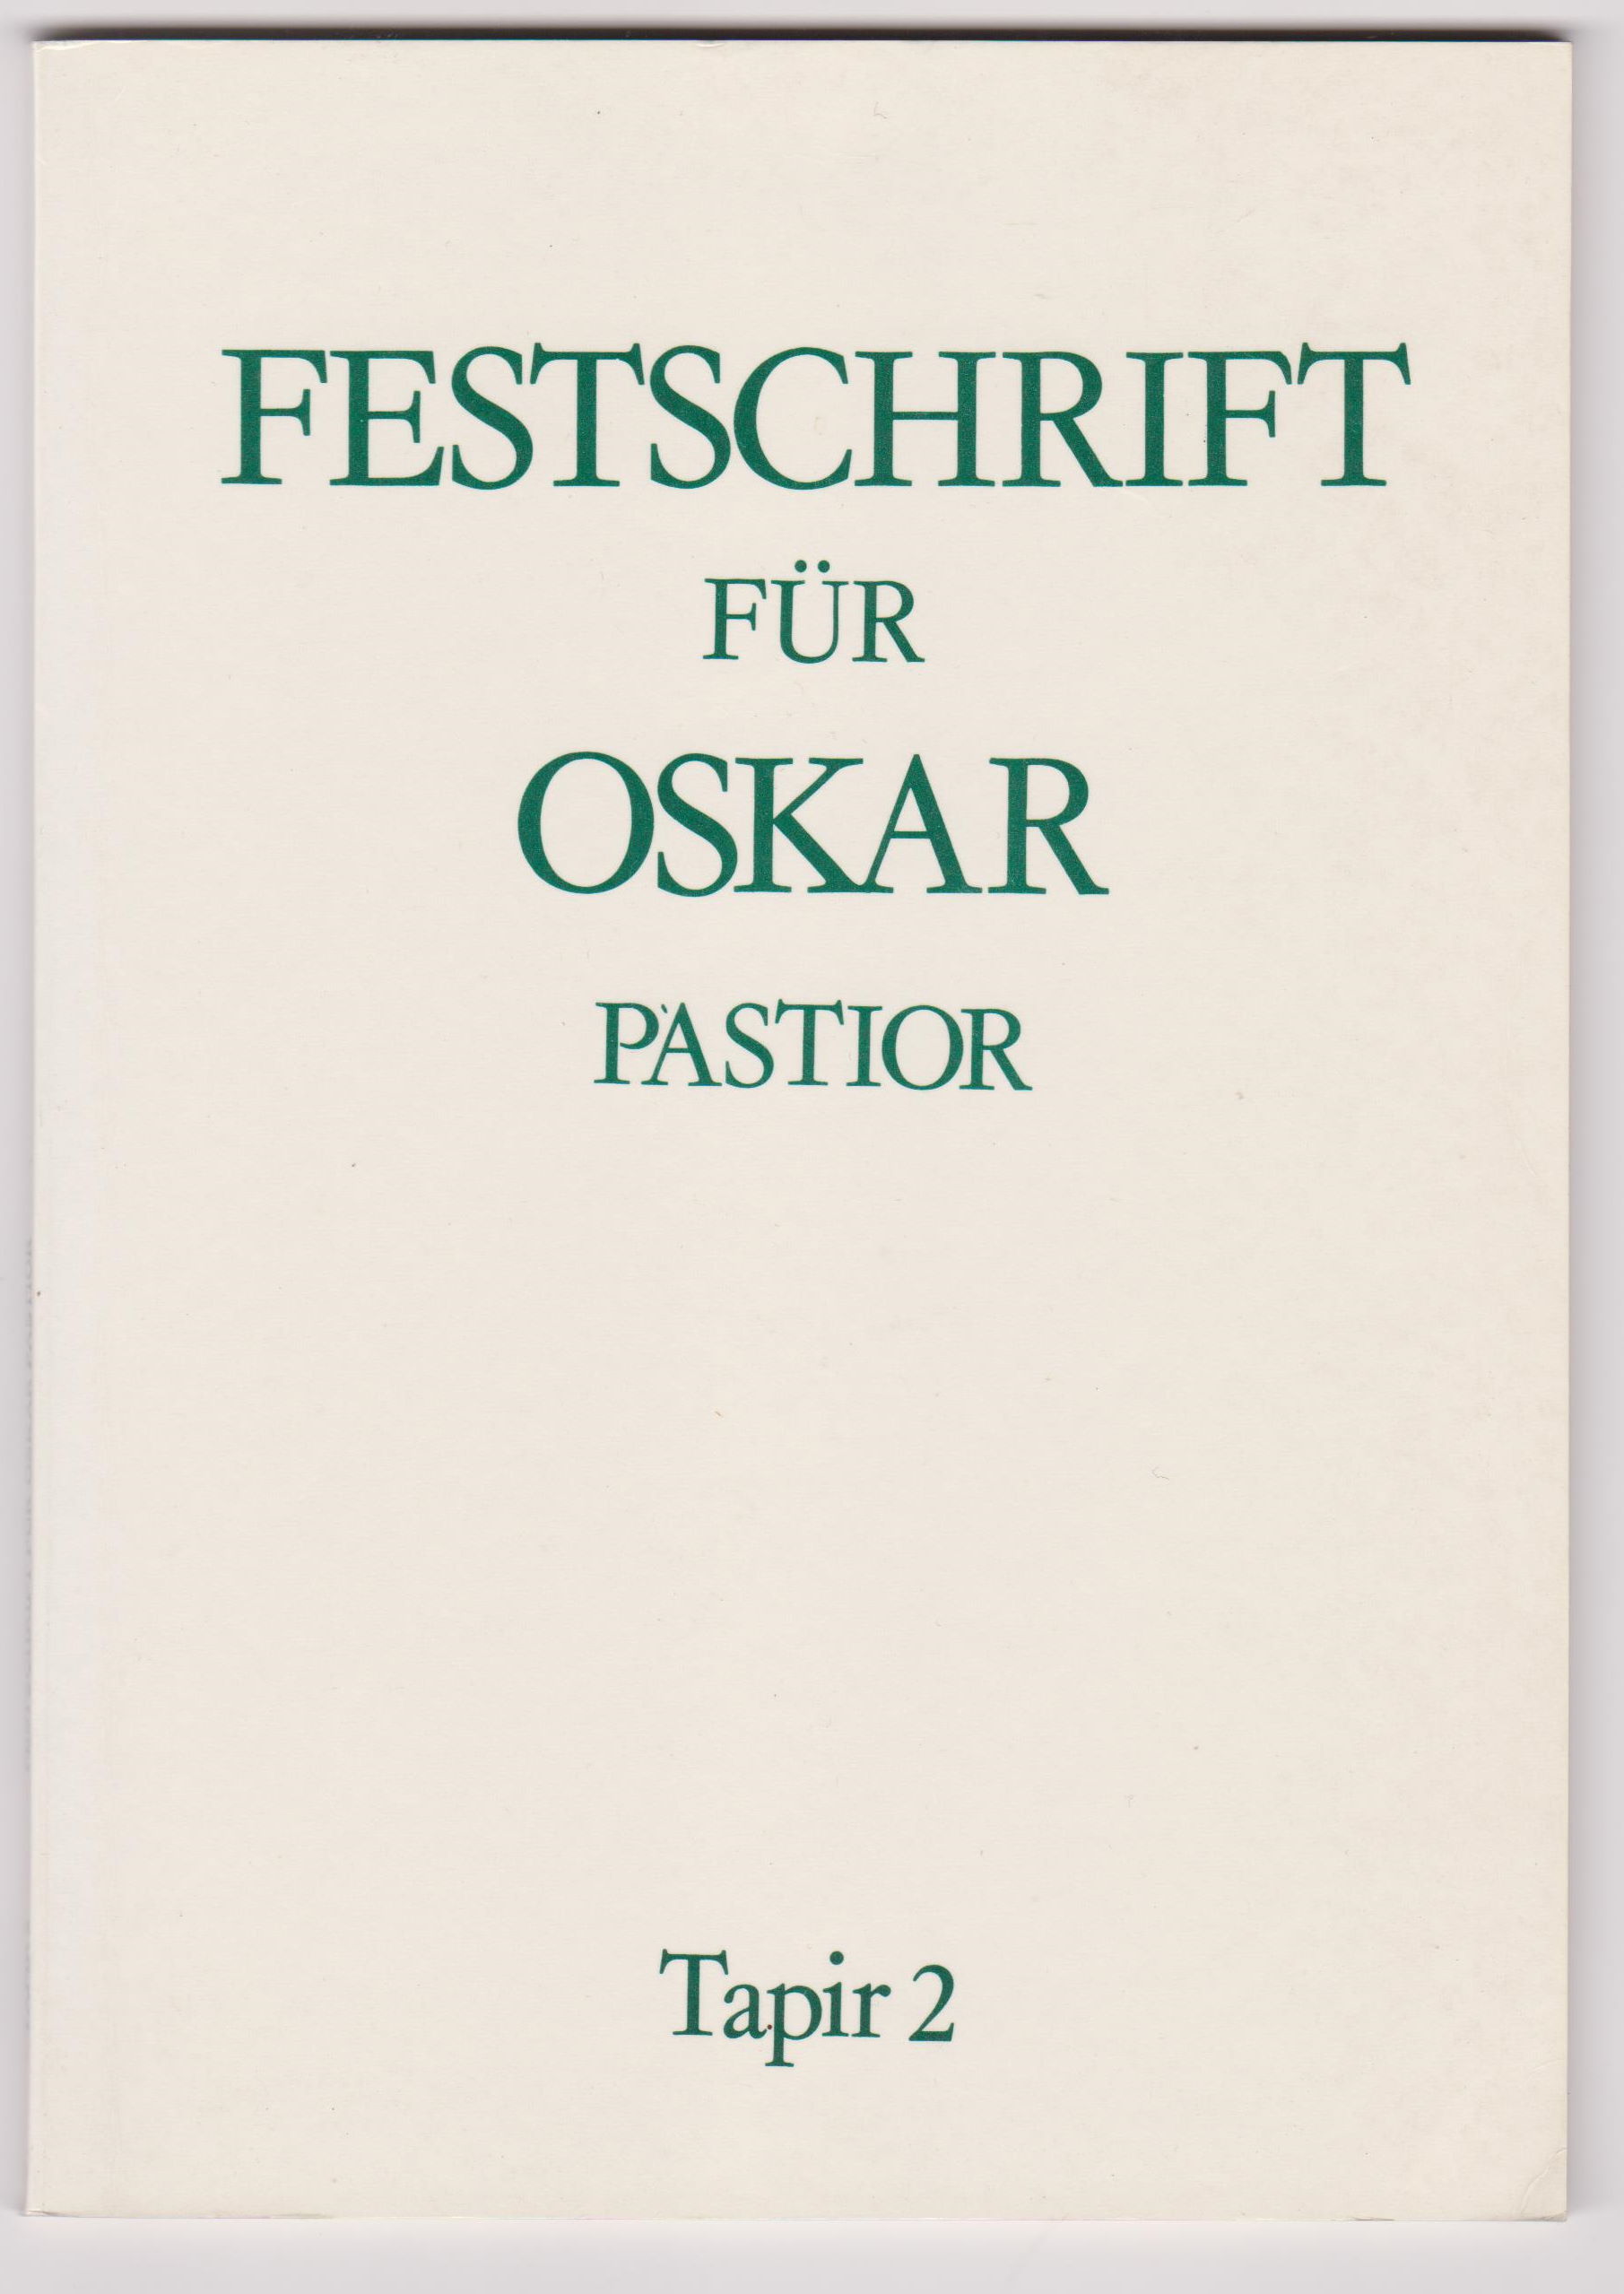 Festschrift für Oskar Pastior.